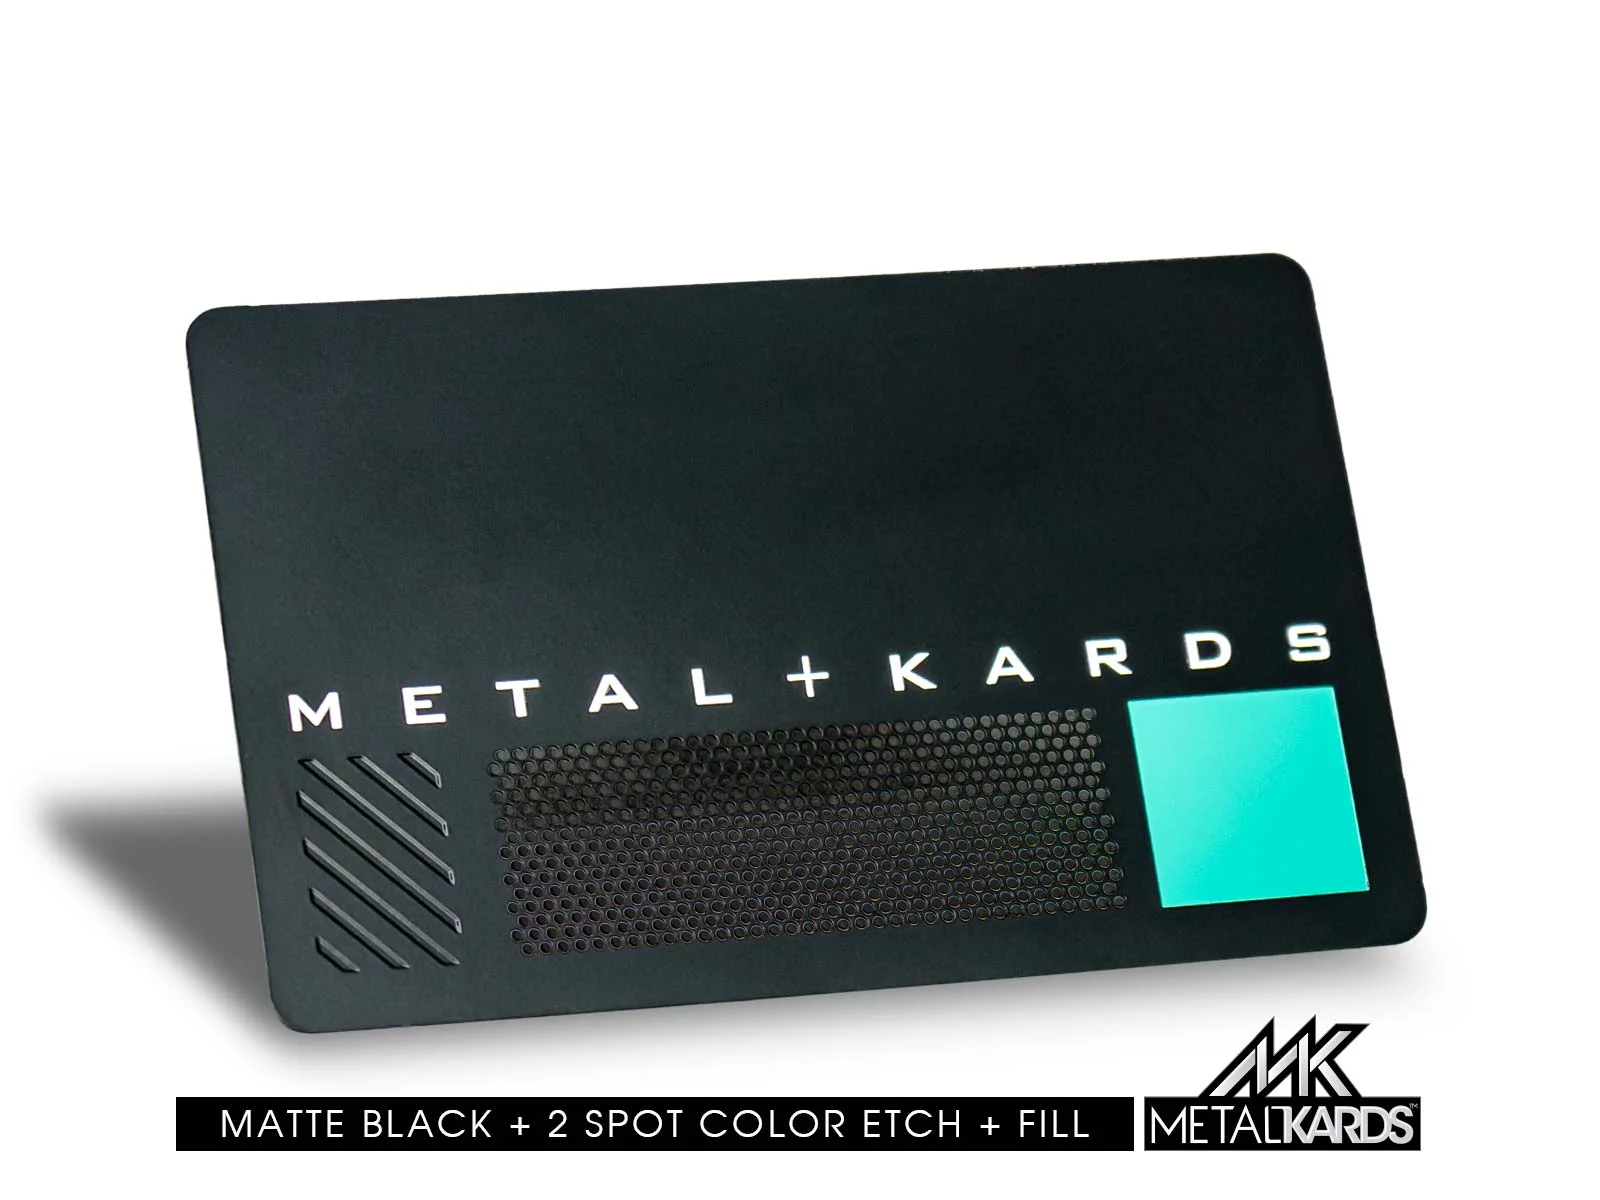 Original Black Metal Cards - MetalKards.com